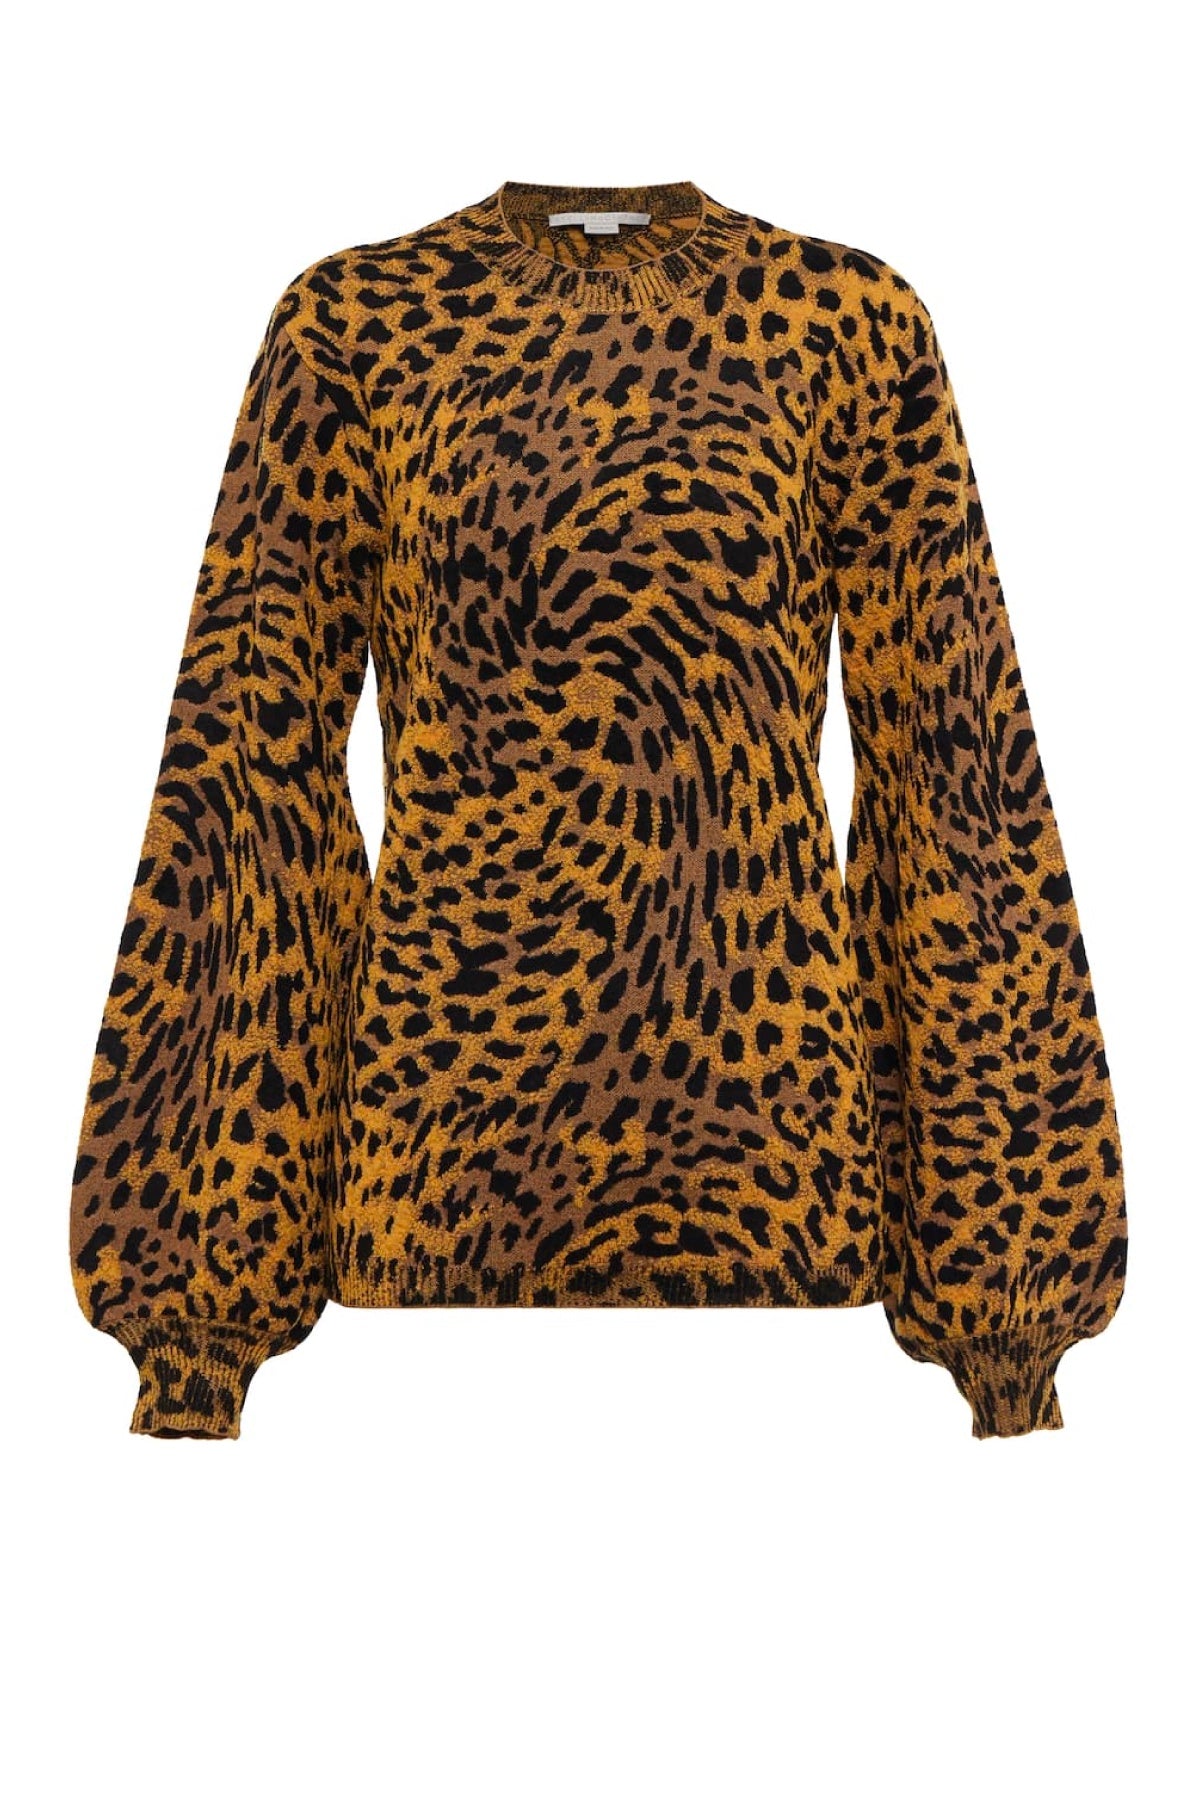 Stella McCartney Cheetah Knit Jumper - Multi